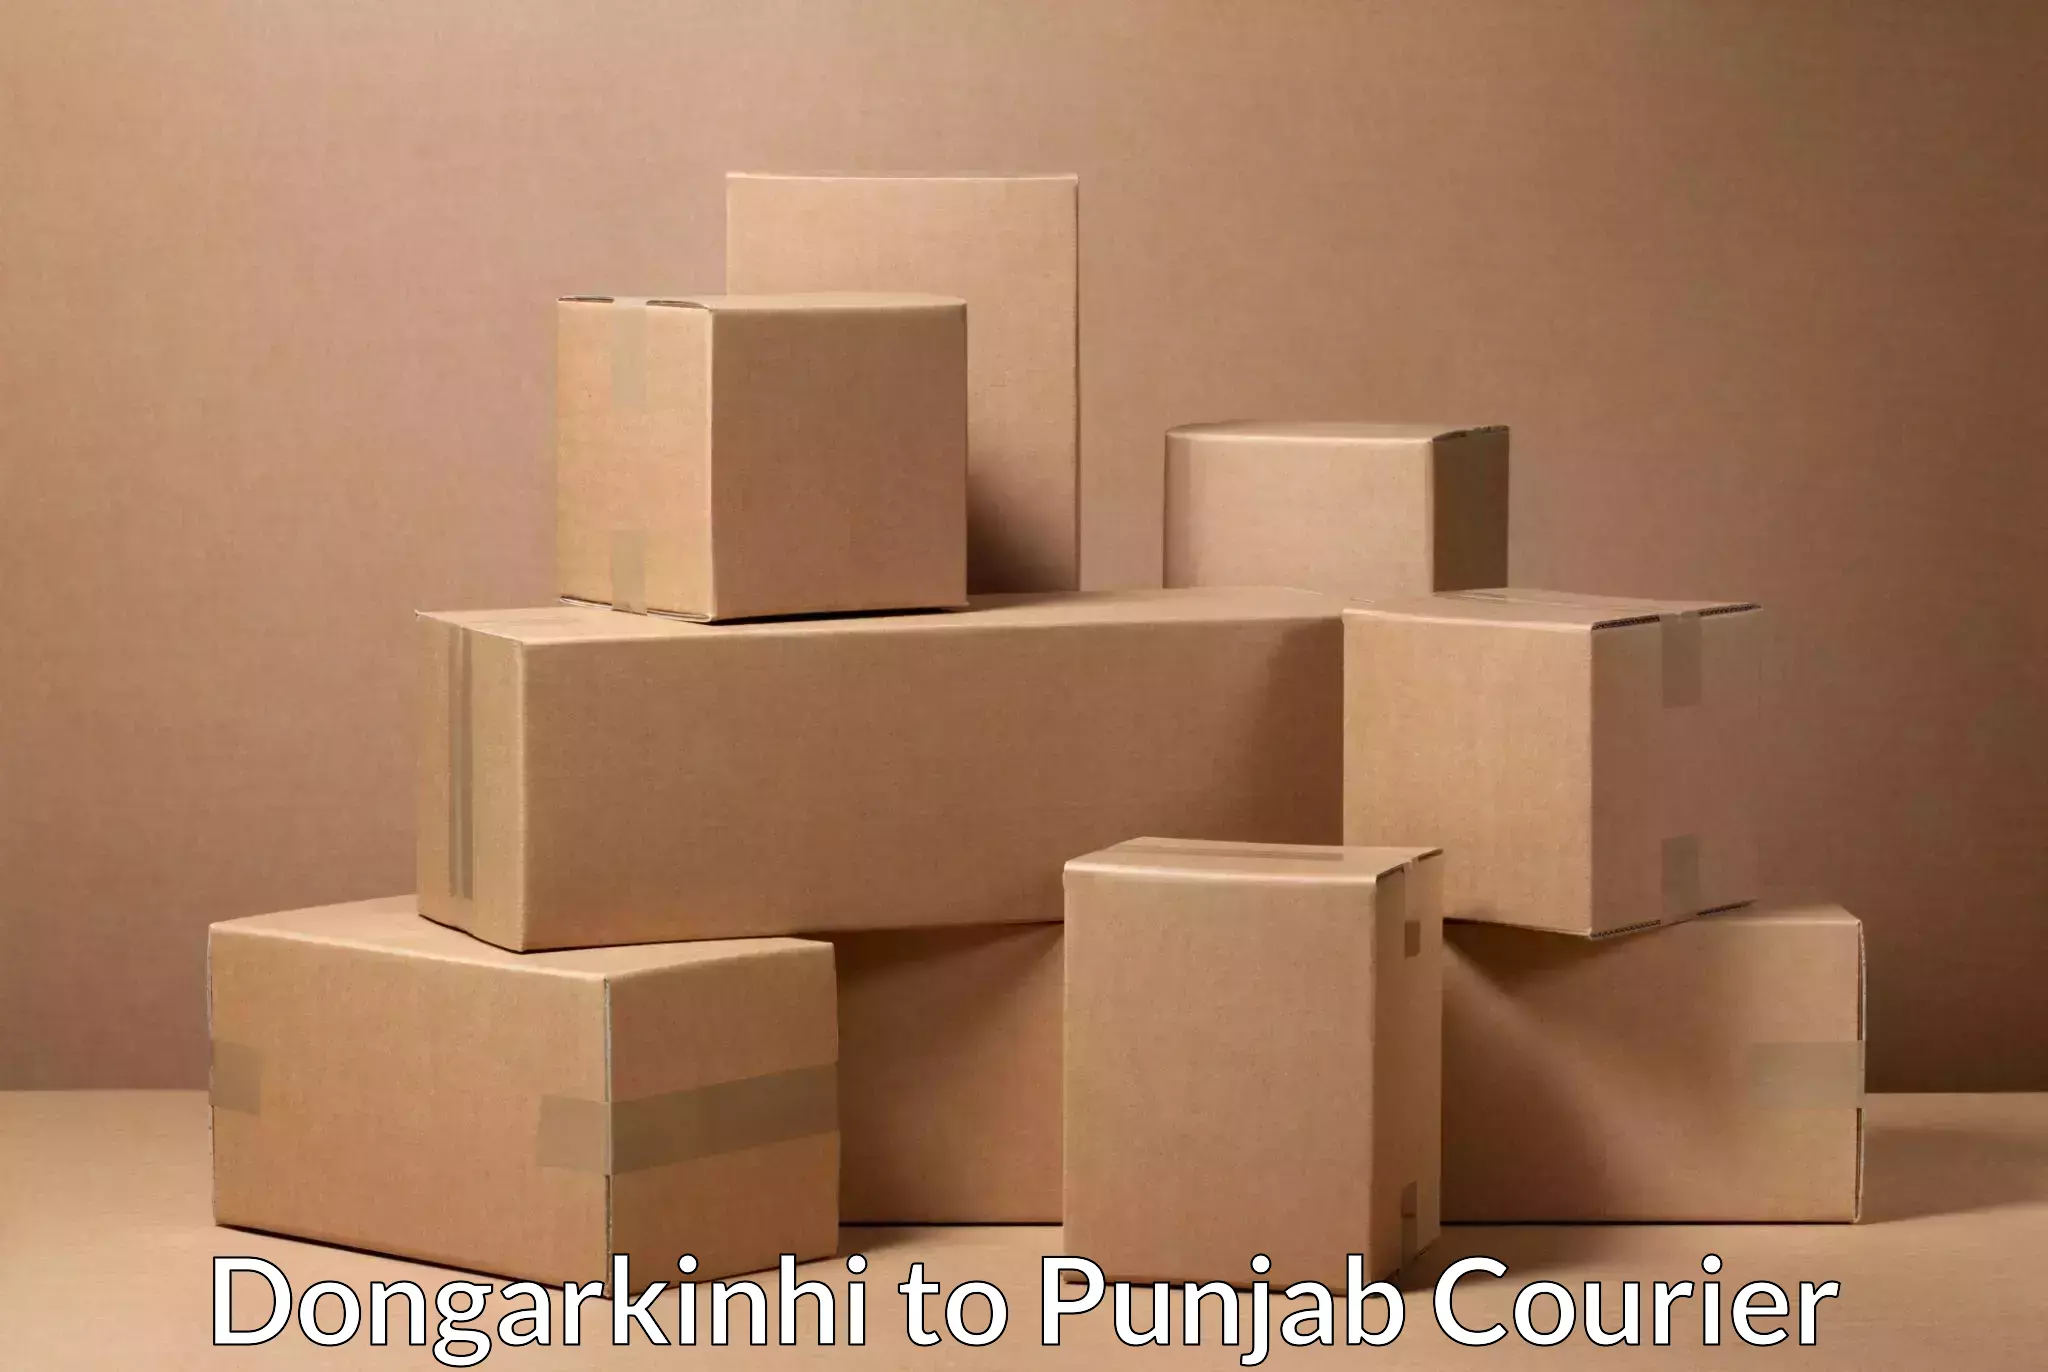 Delivery service partnership Dongarkinhi to Punjab